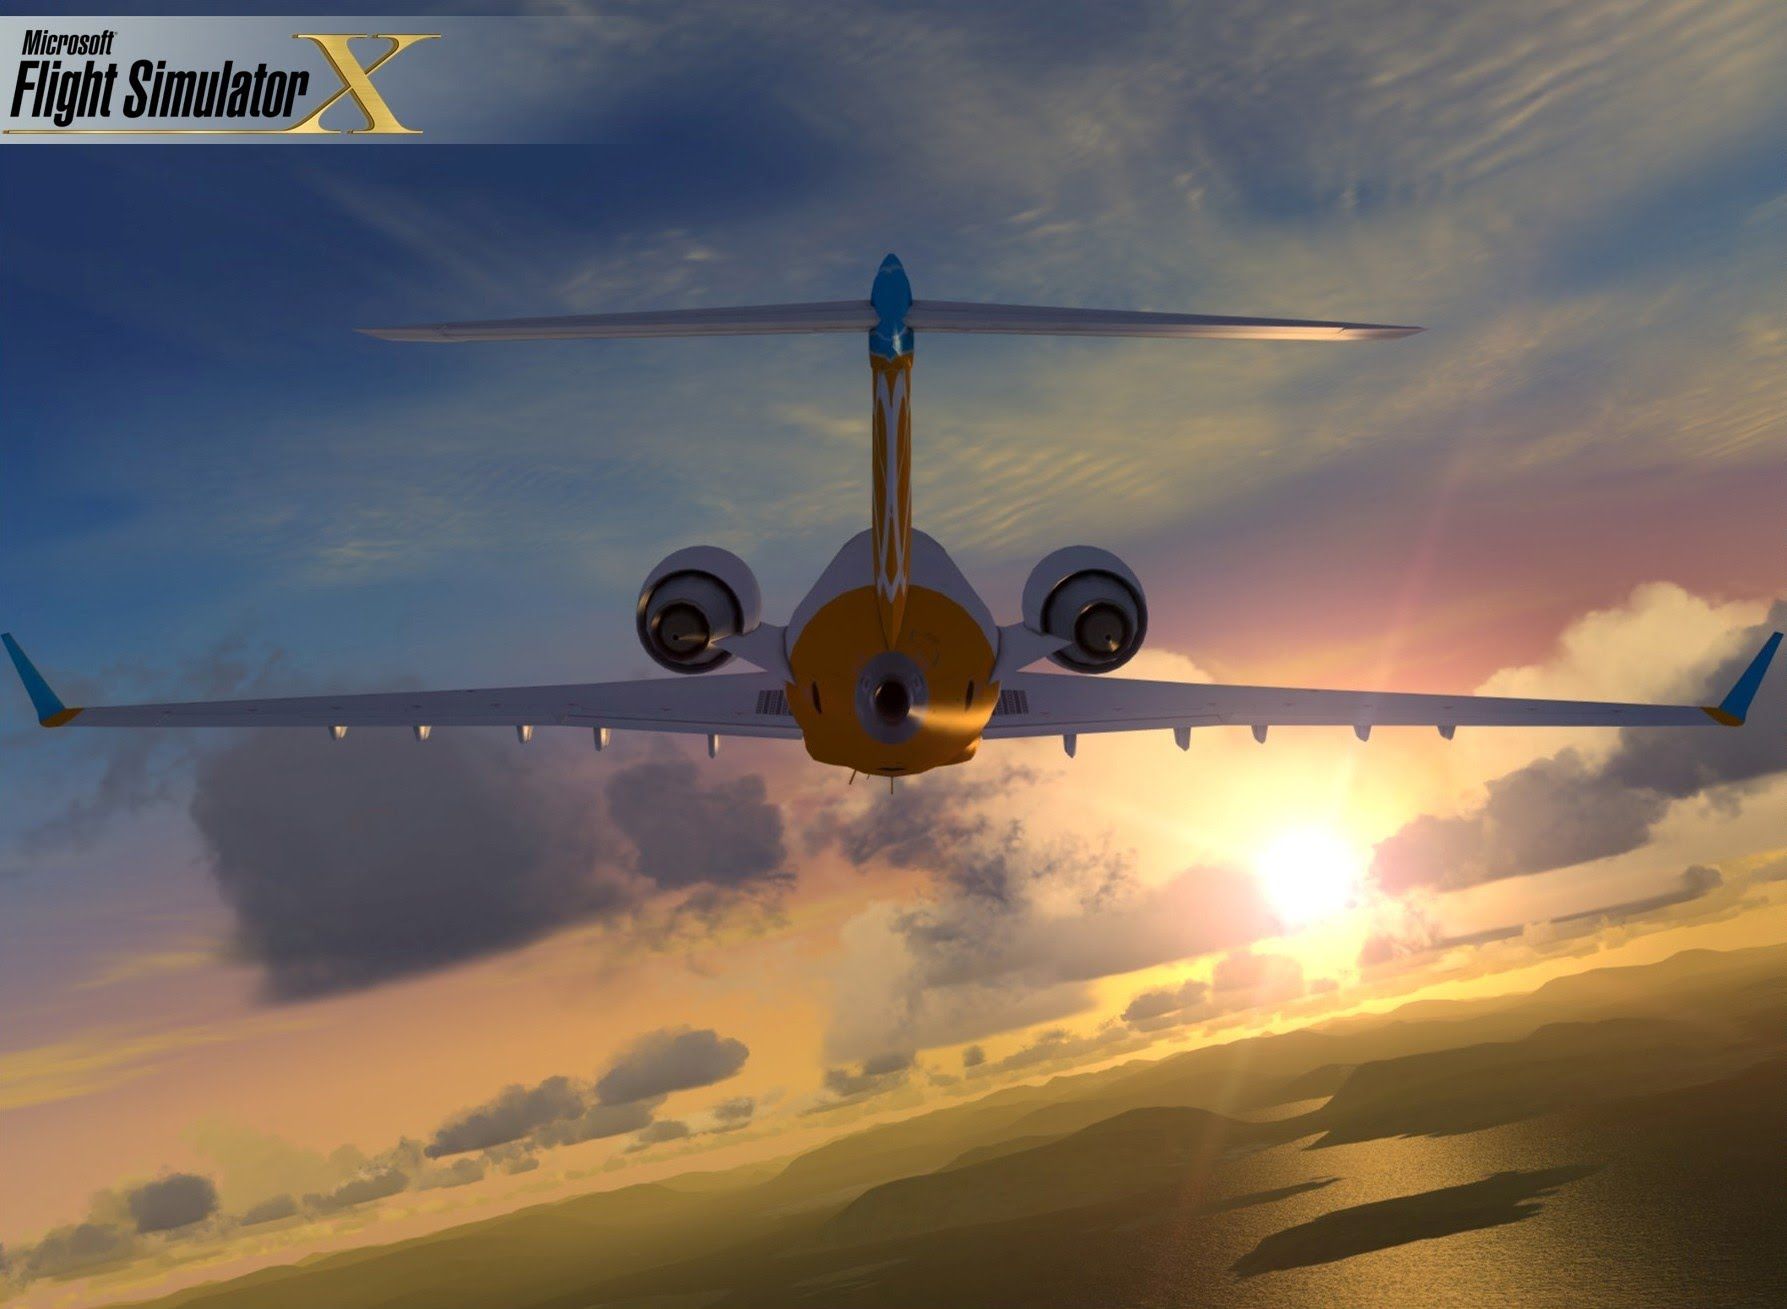 720p microsoft flight simulator wallpaper